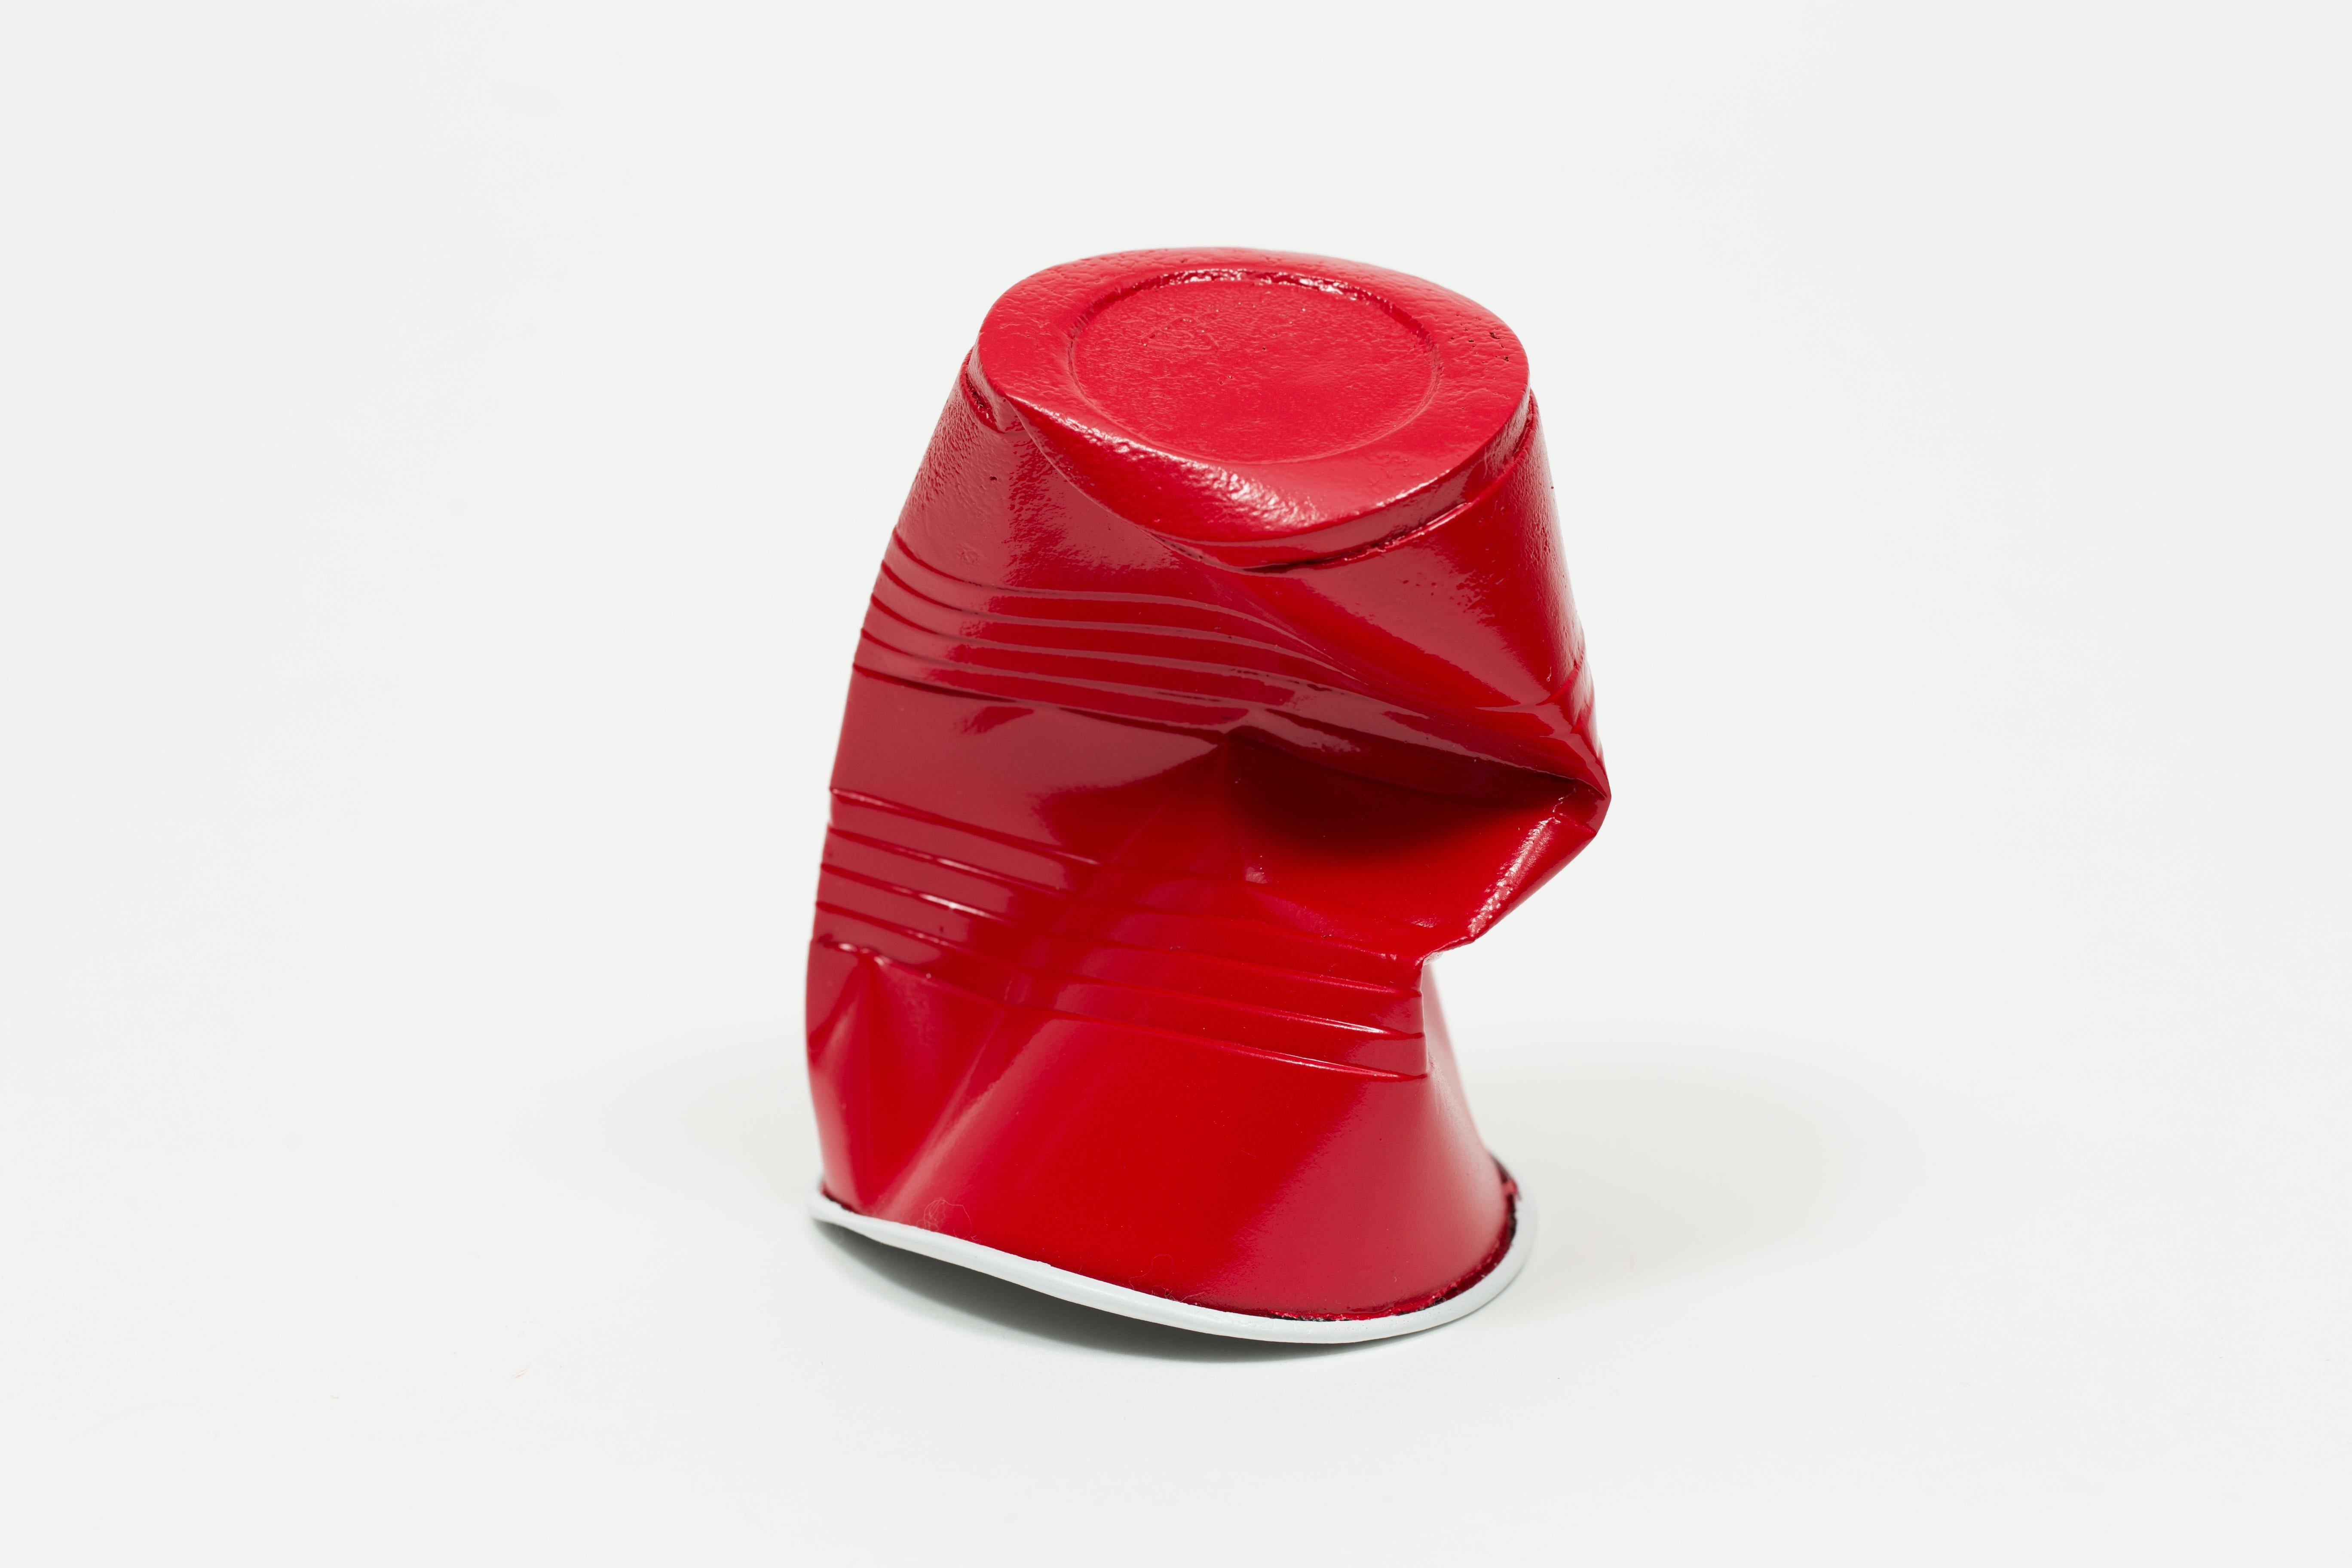 Cup #5 - Sculpture by Zeke Moores